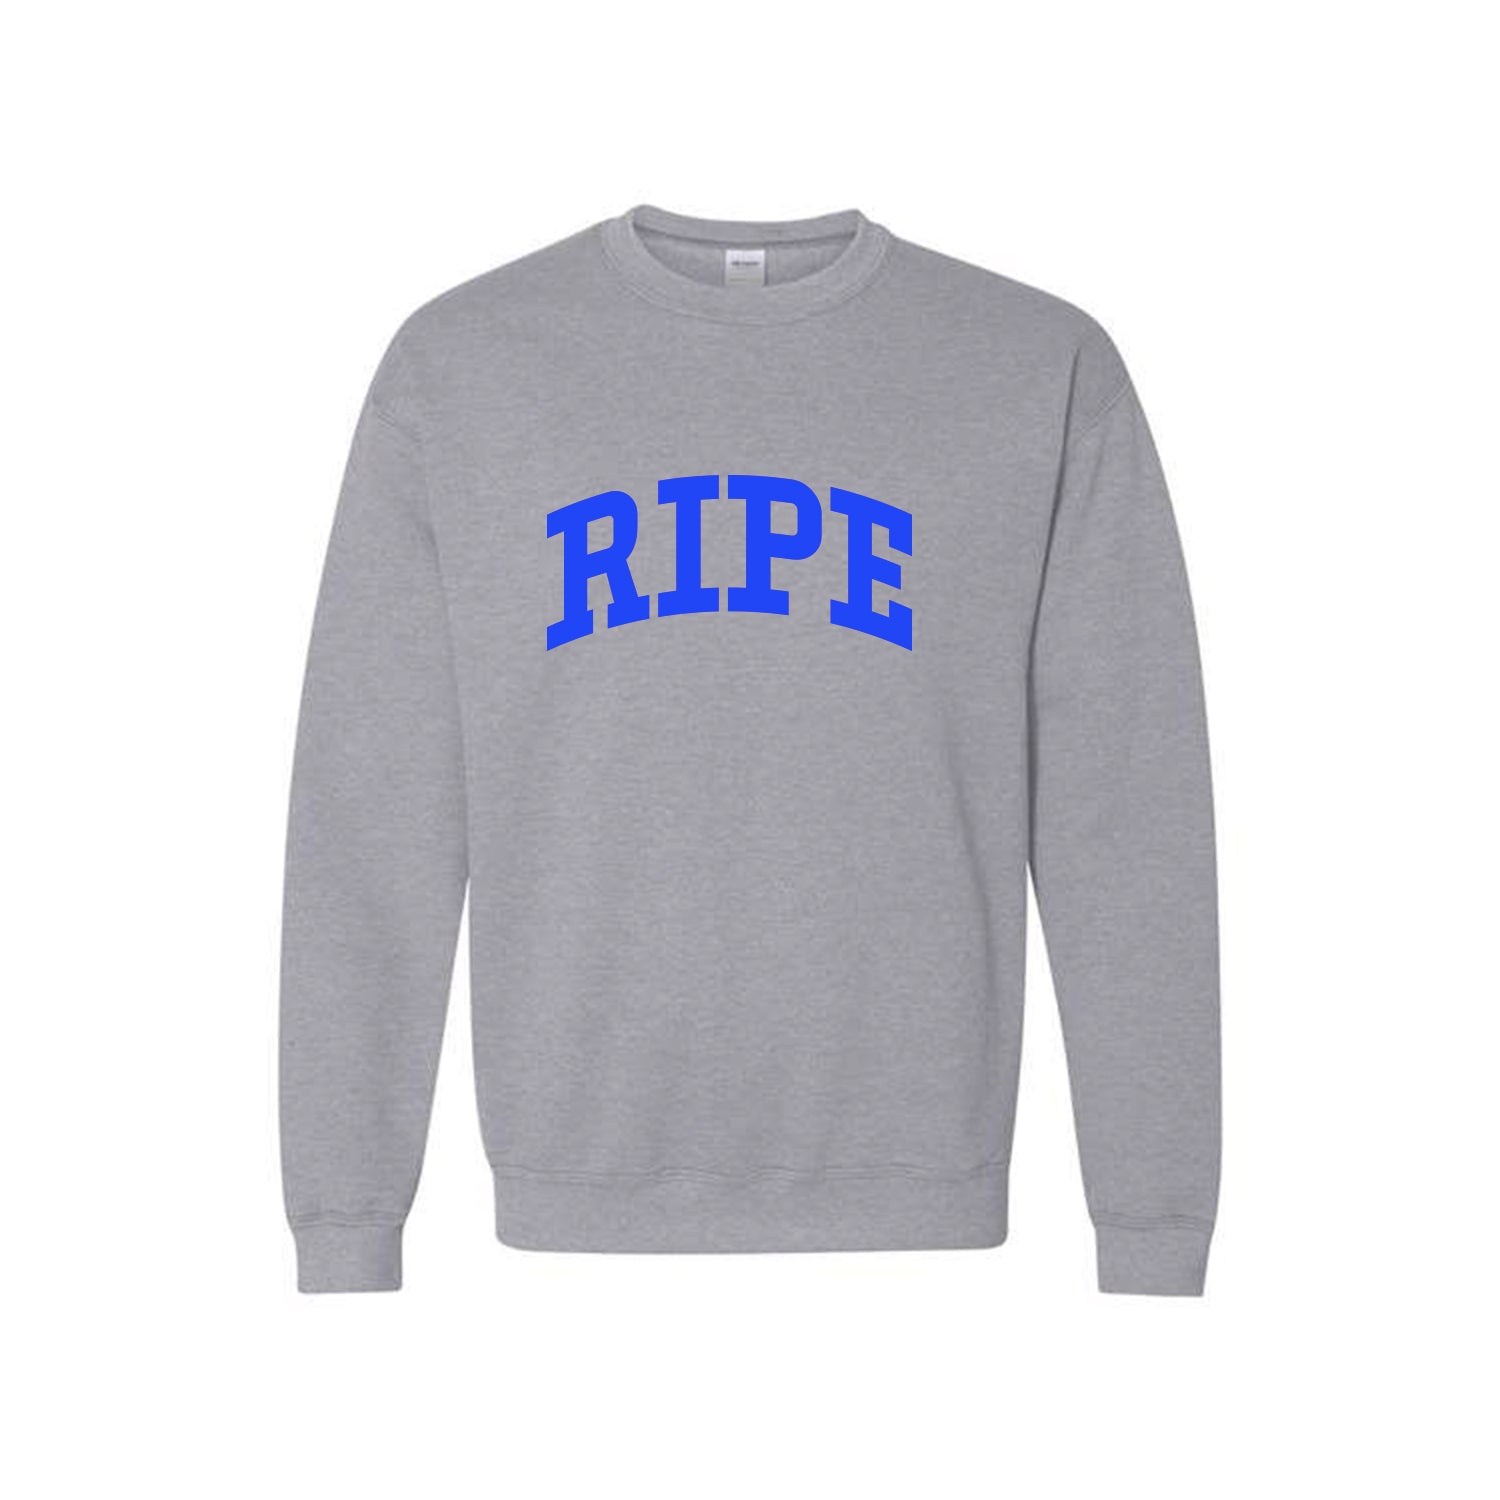 Ripe Crewneck Sweaters